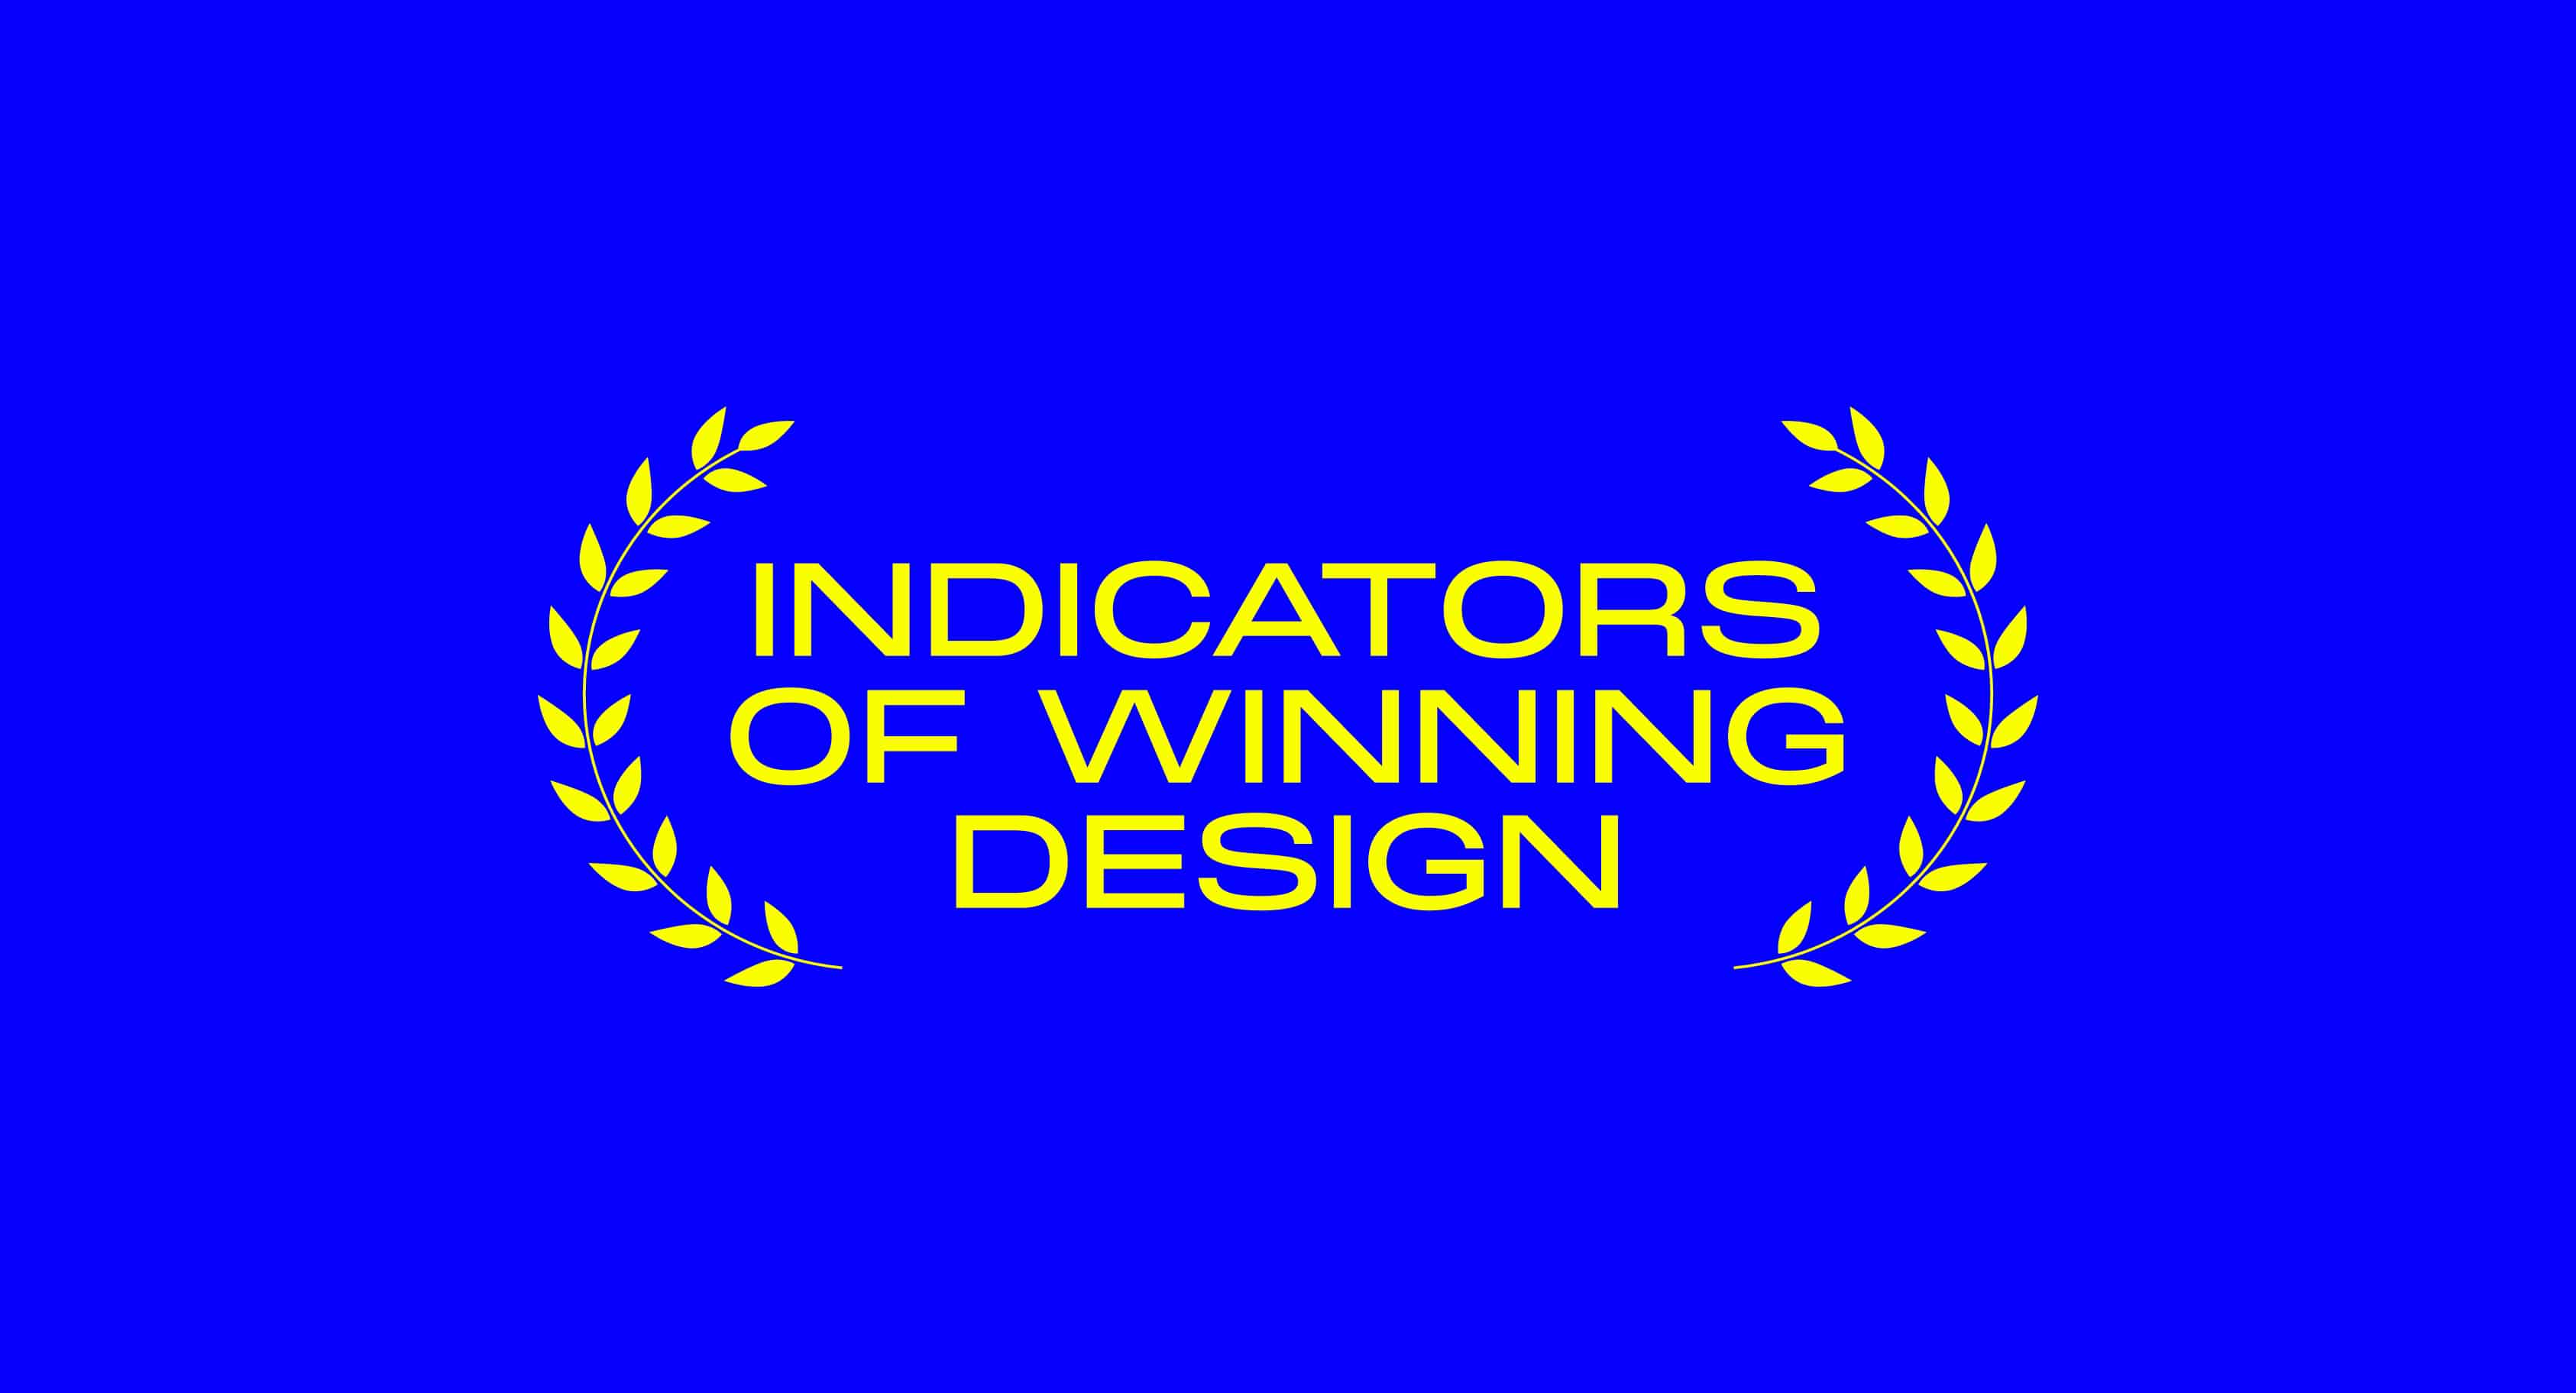 Indicators of winning design